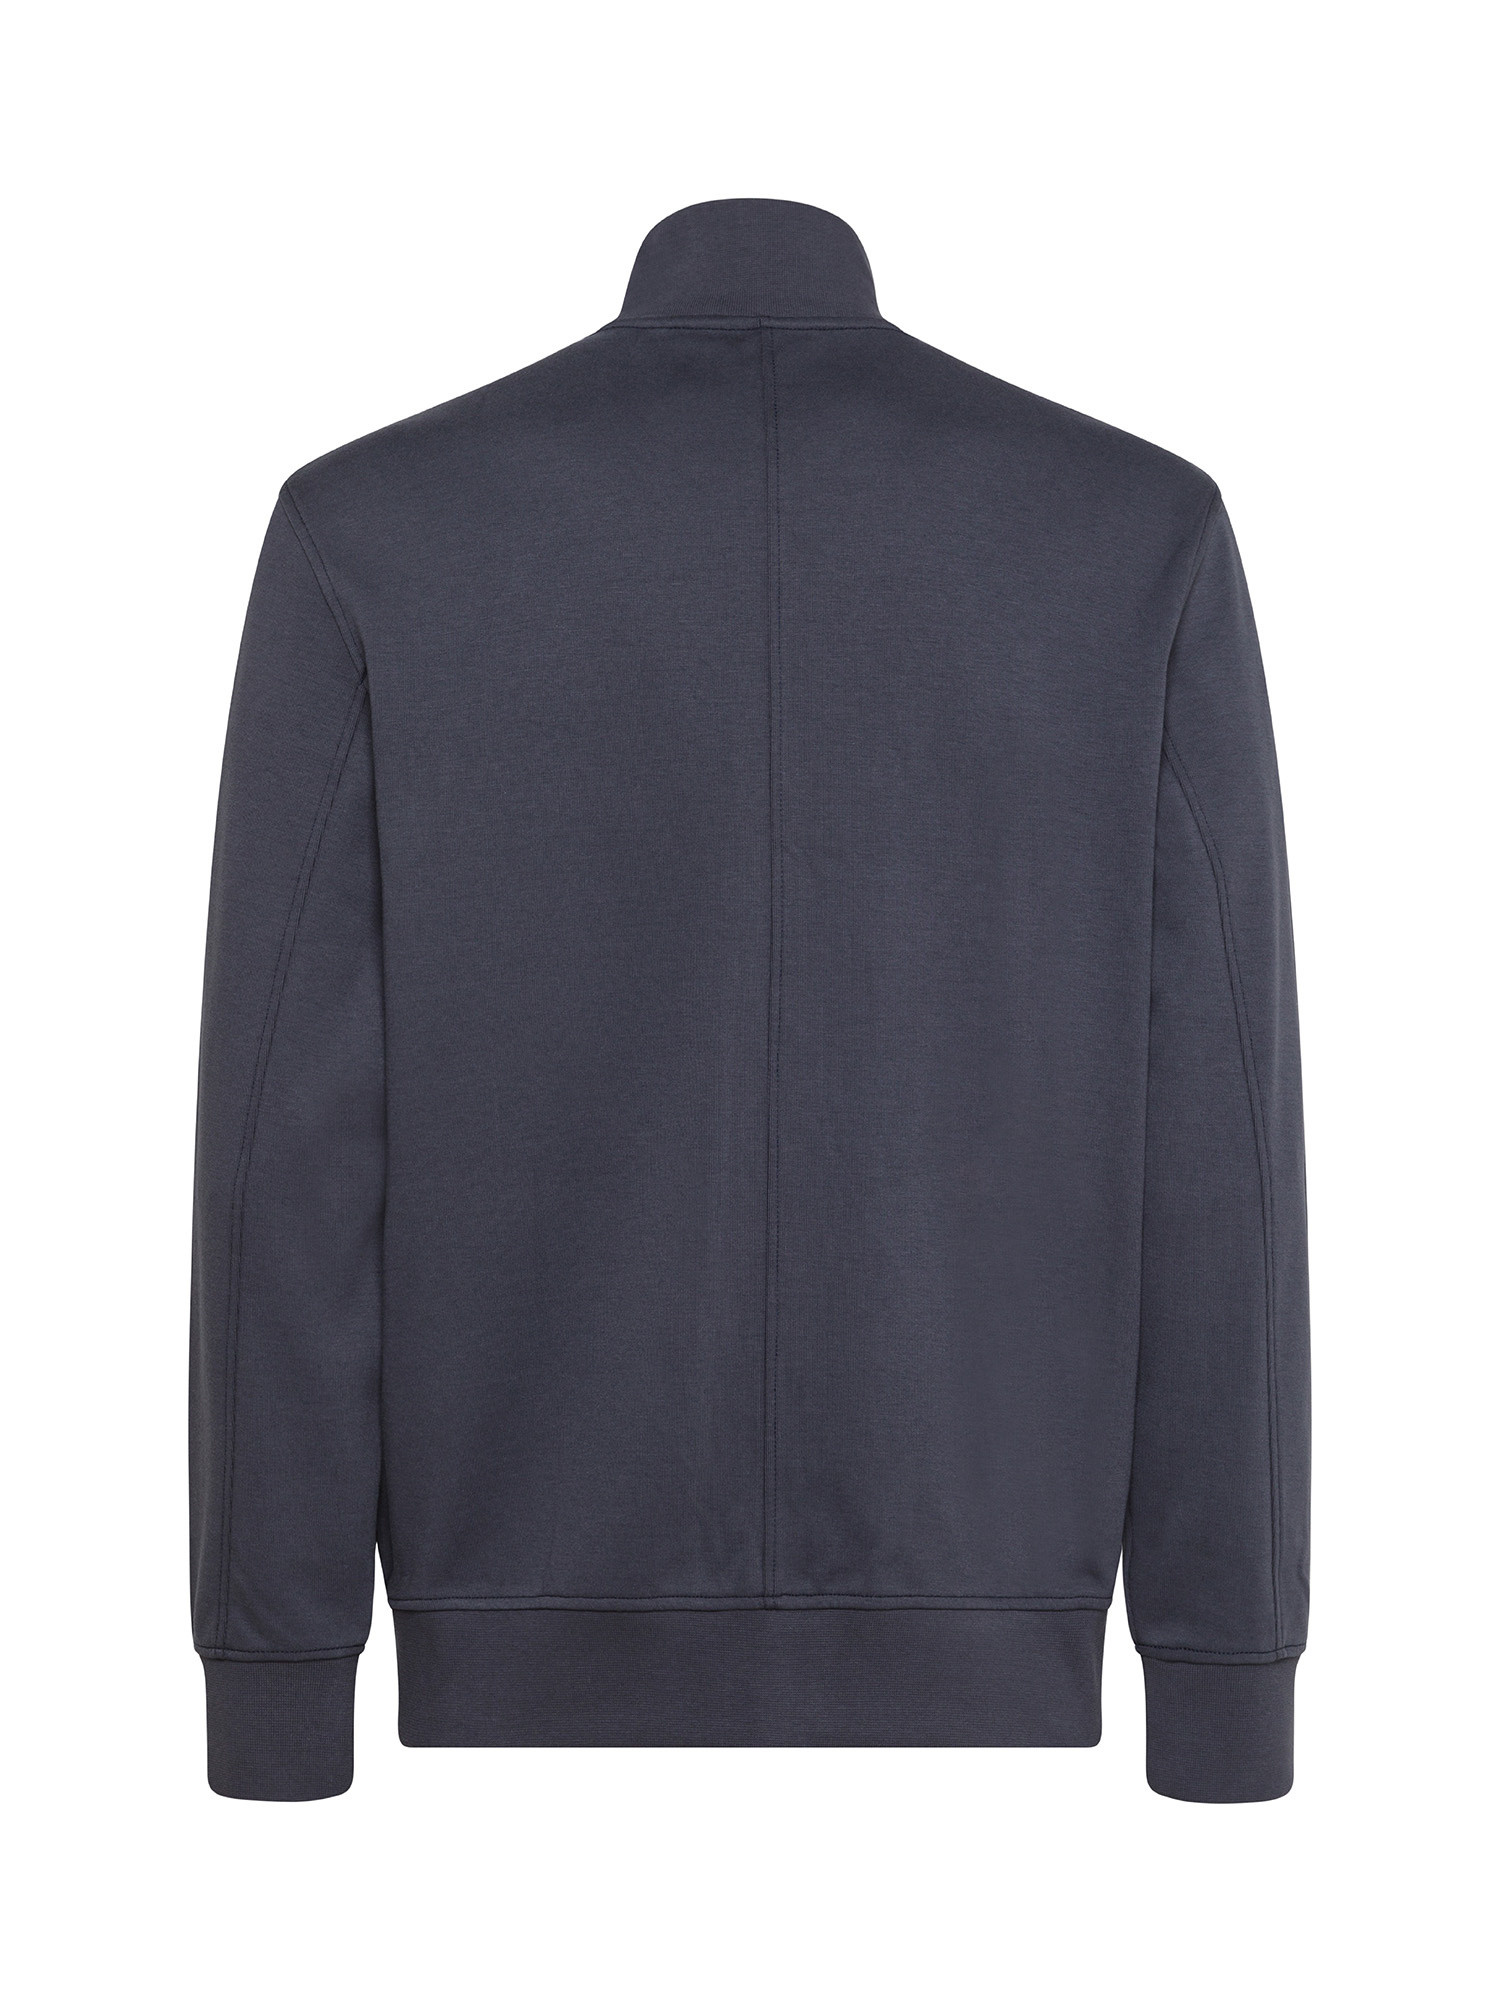 Armani Exchange - Full zip sweatshirt with logo, Dark Grey, large image number 1